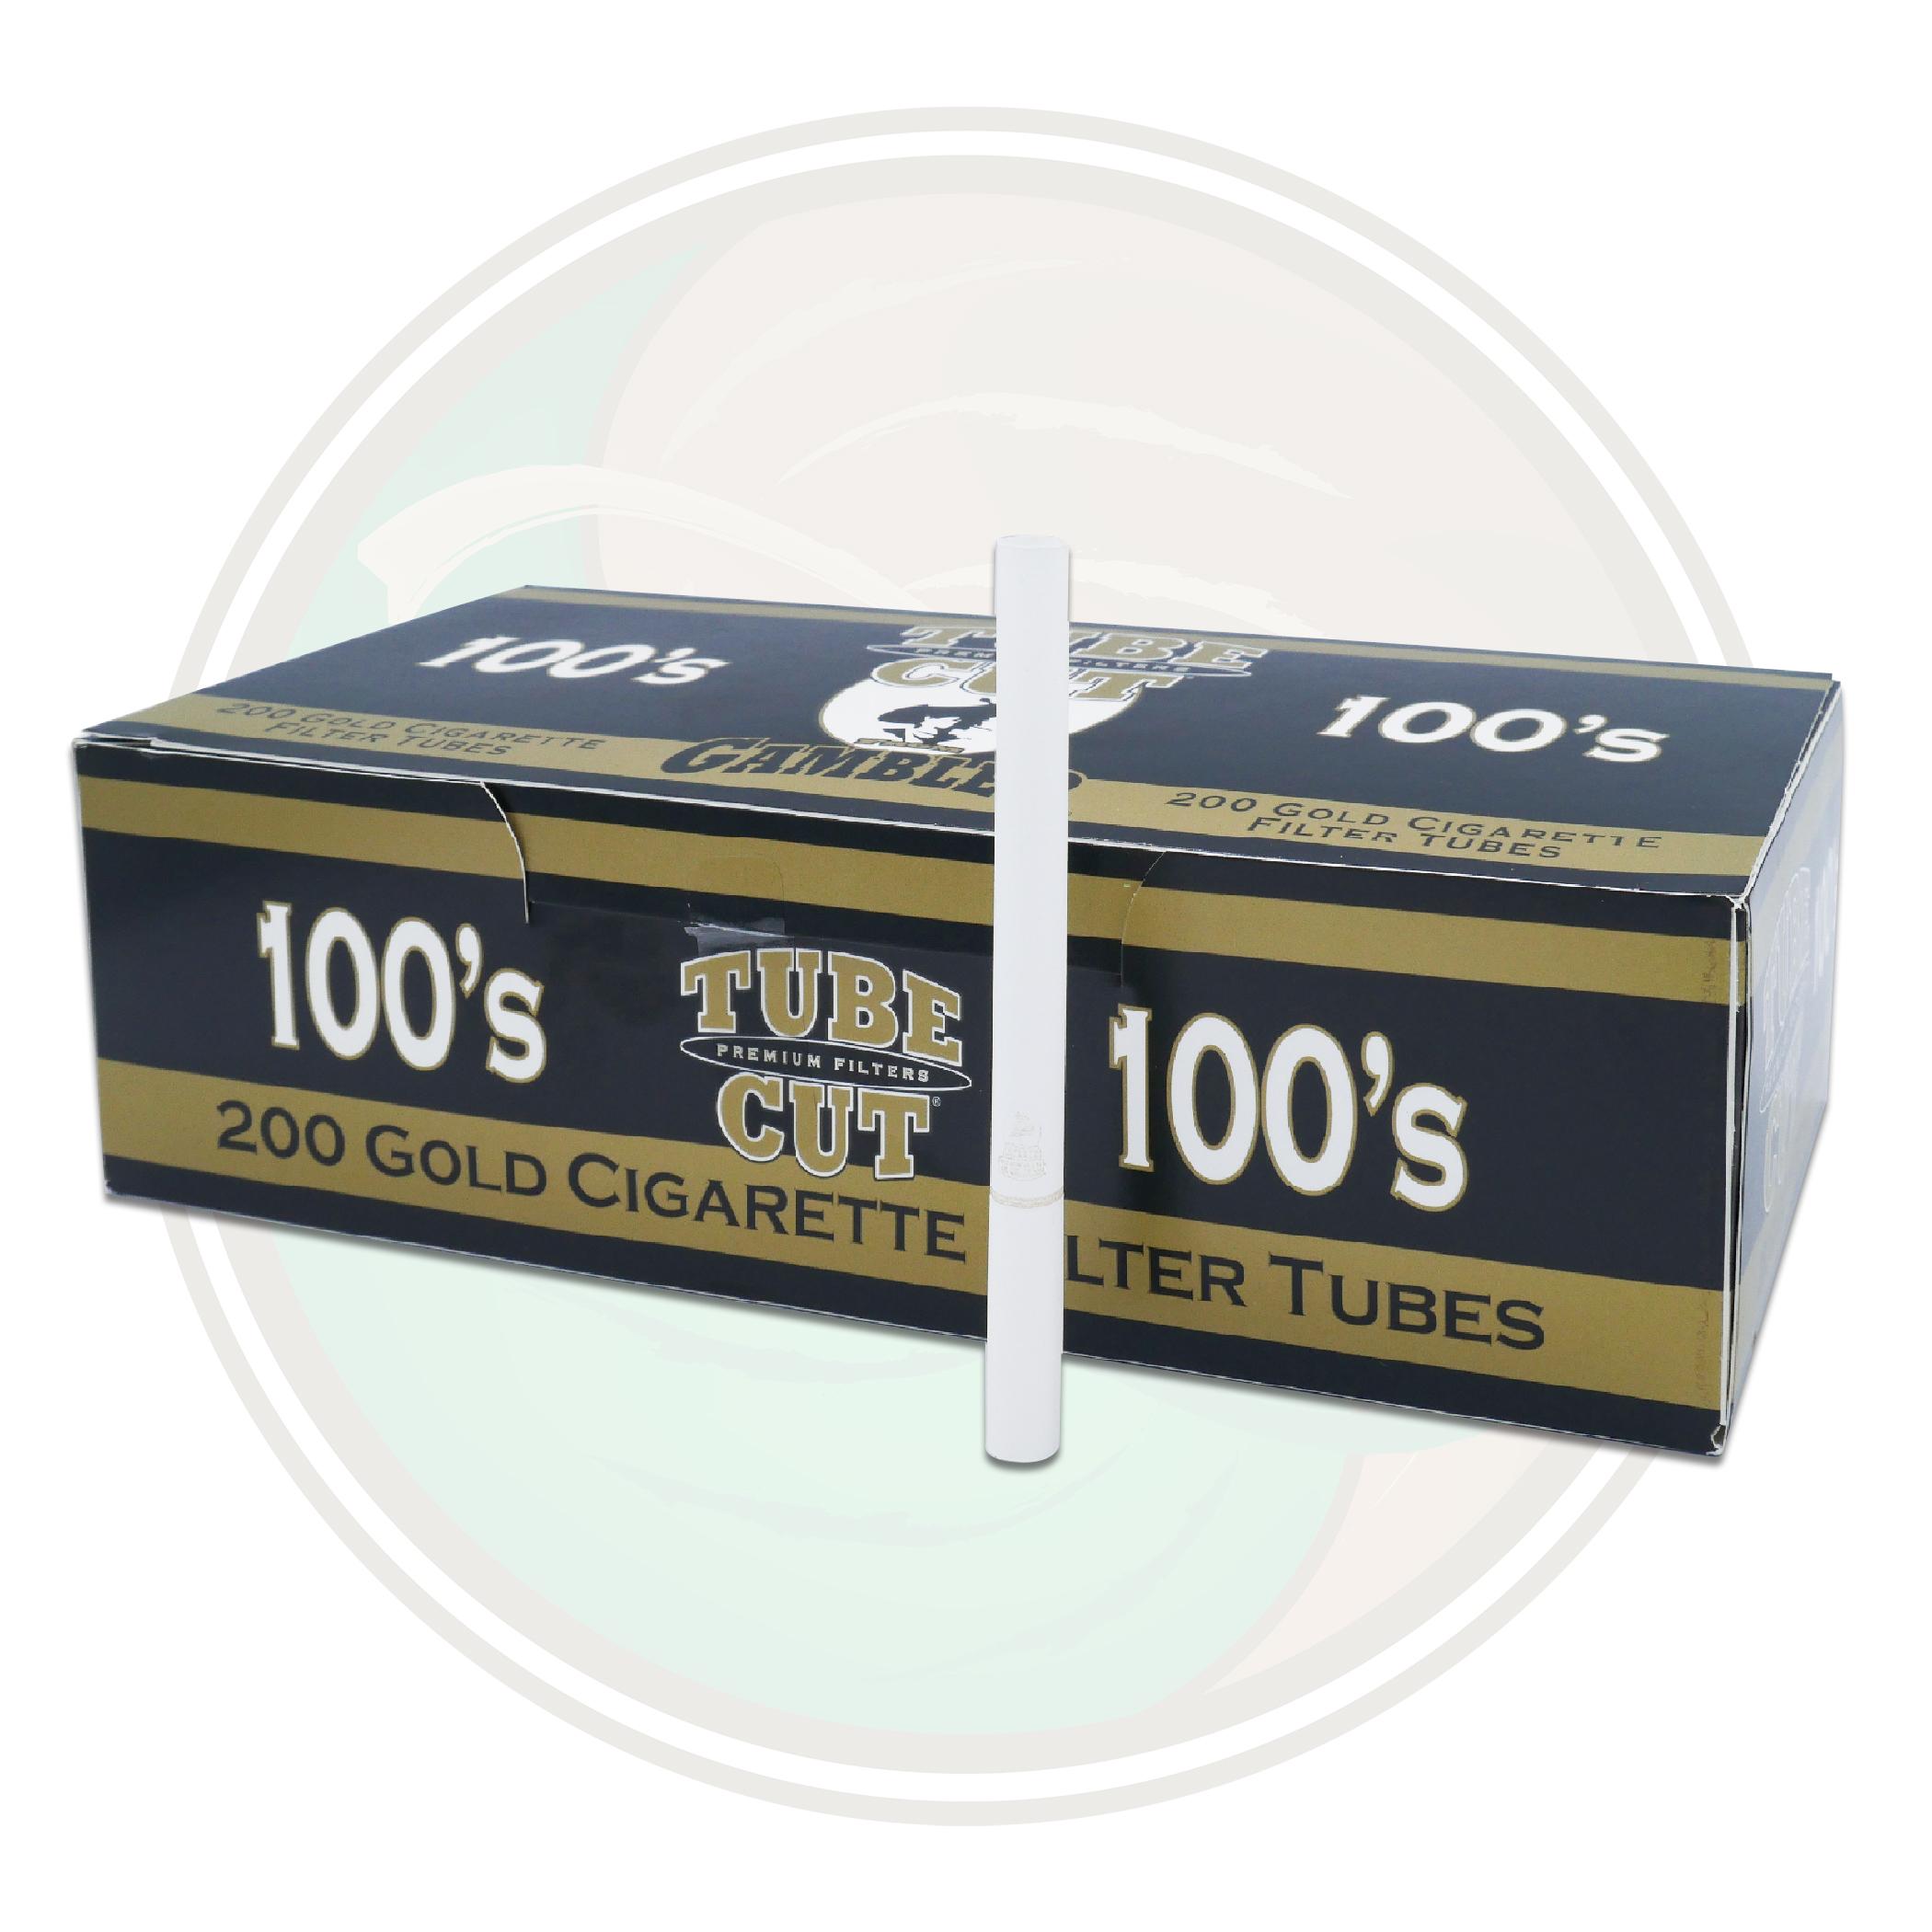 Gambler Tube Cut 100s Light Tubes for MYO Cigarettes